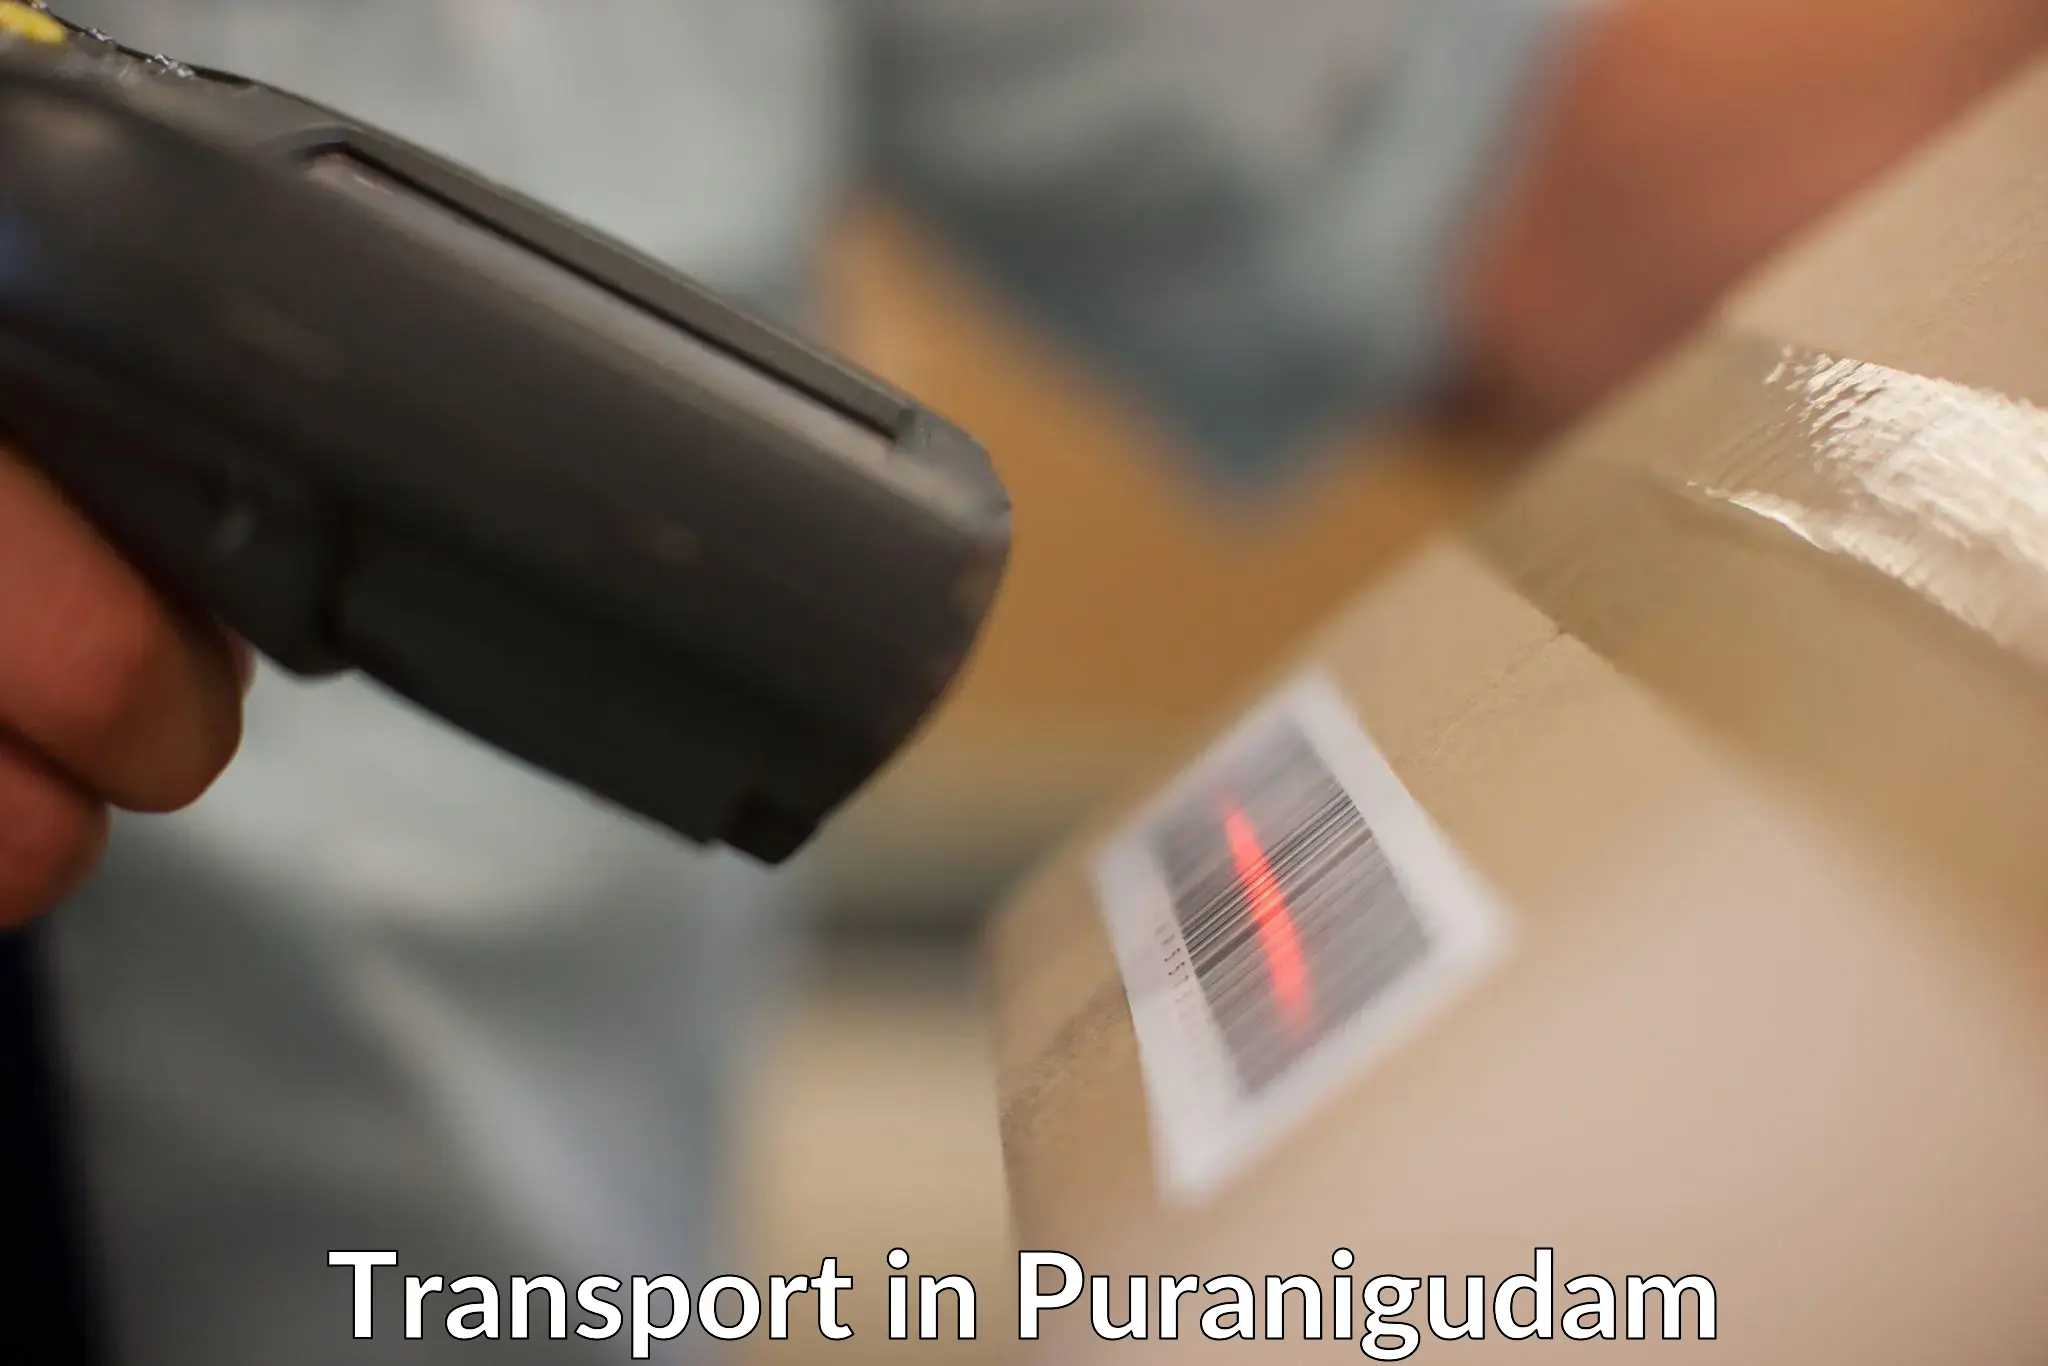 Intercity transport in Puranigudam